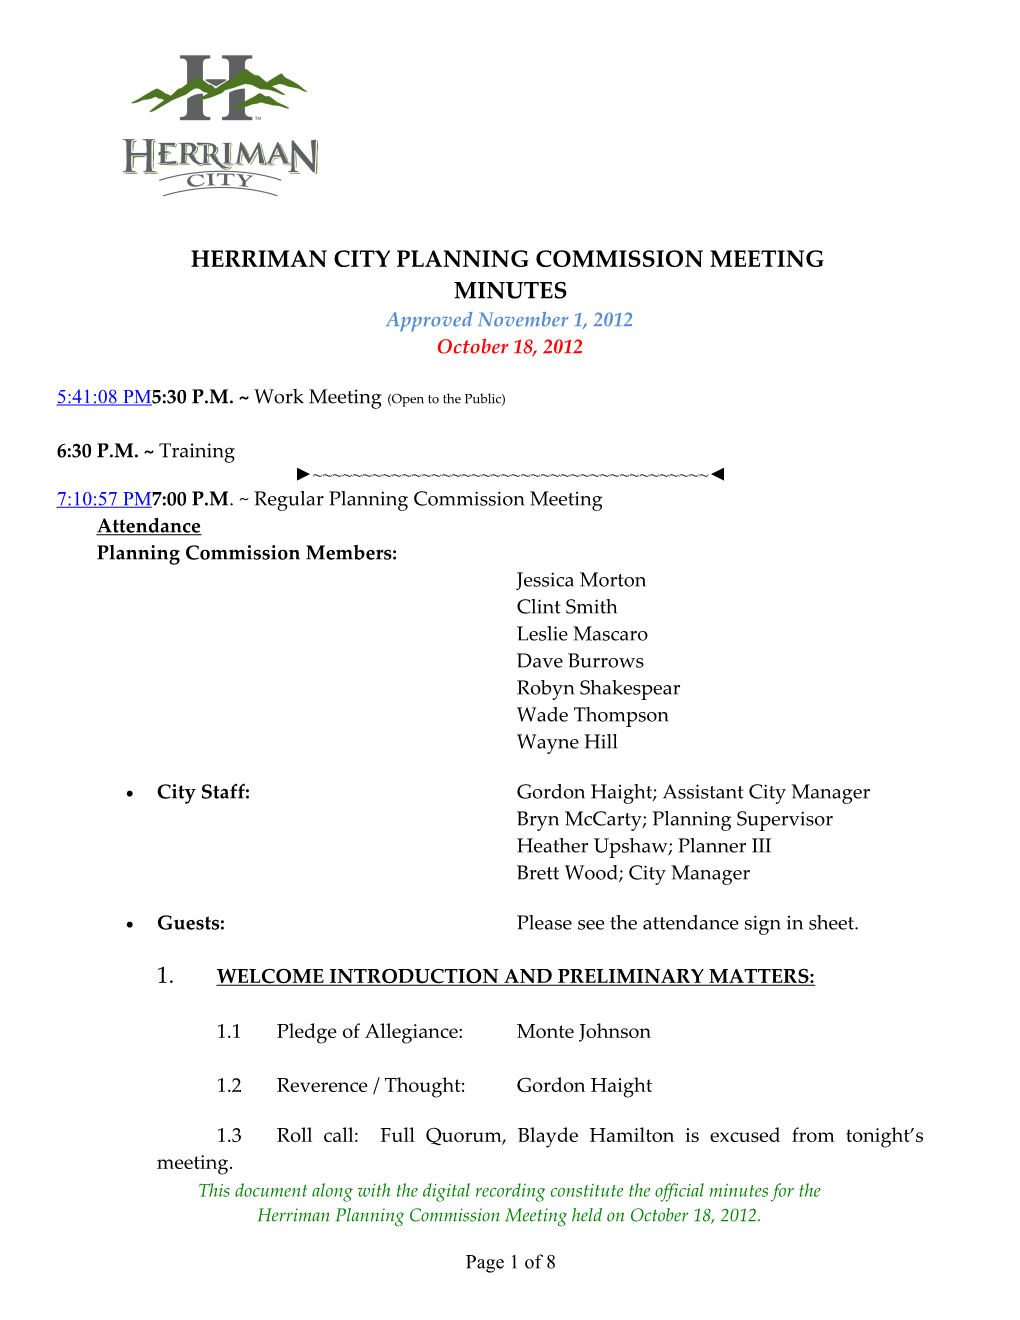 Herrimancity Planning Commission Meeting